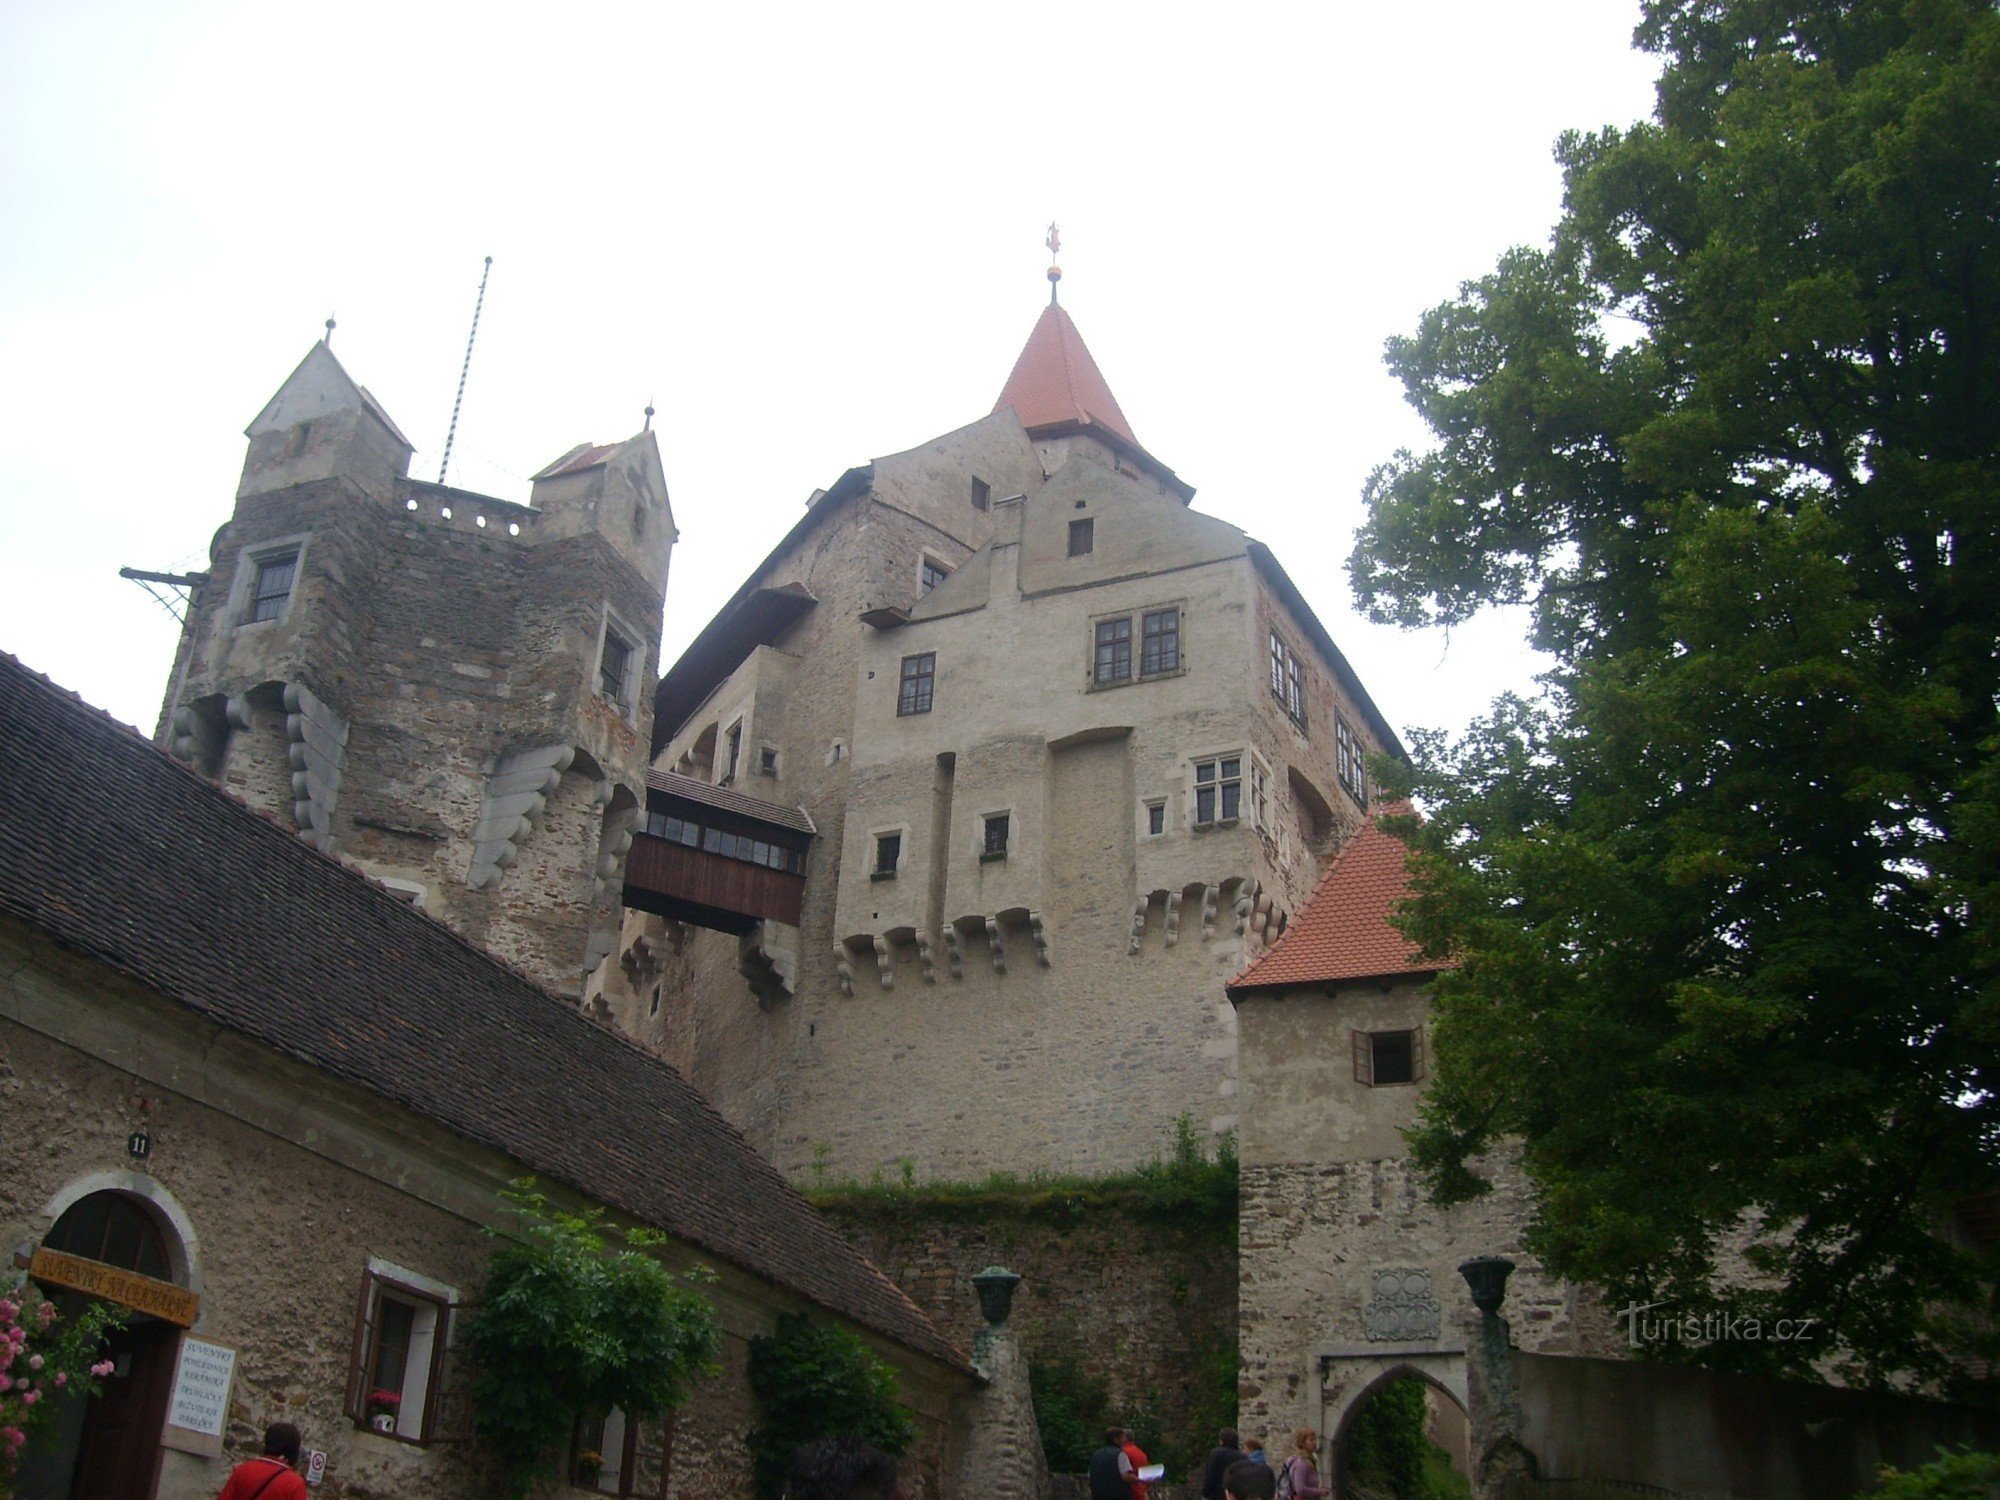 Pernštejn, king of Moravian castles